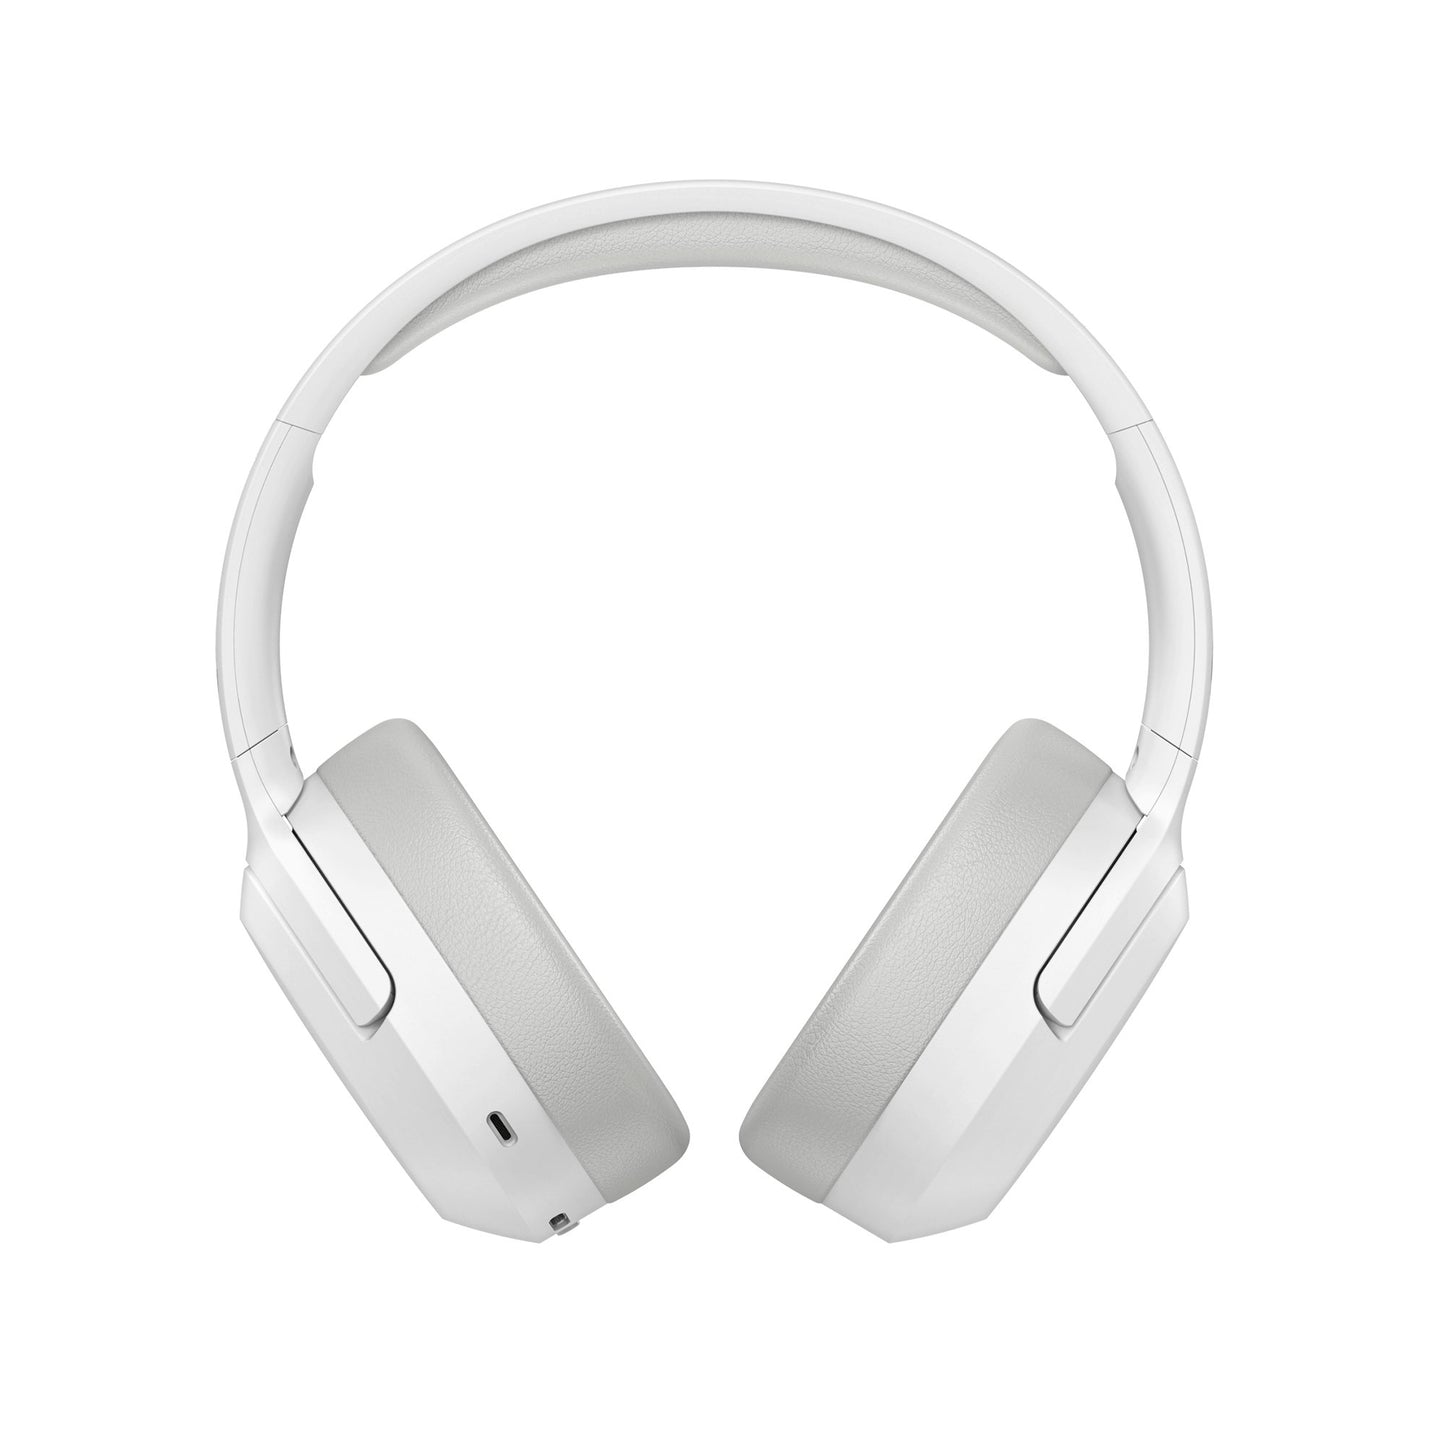 Edifier W820NB Hi-Res Stereo Wireless Bluetooth Headset - White